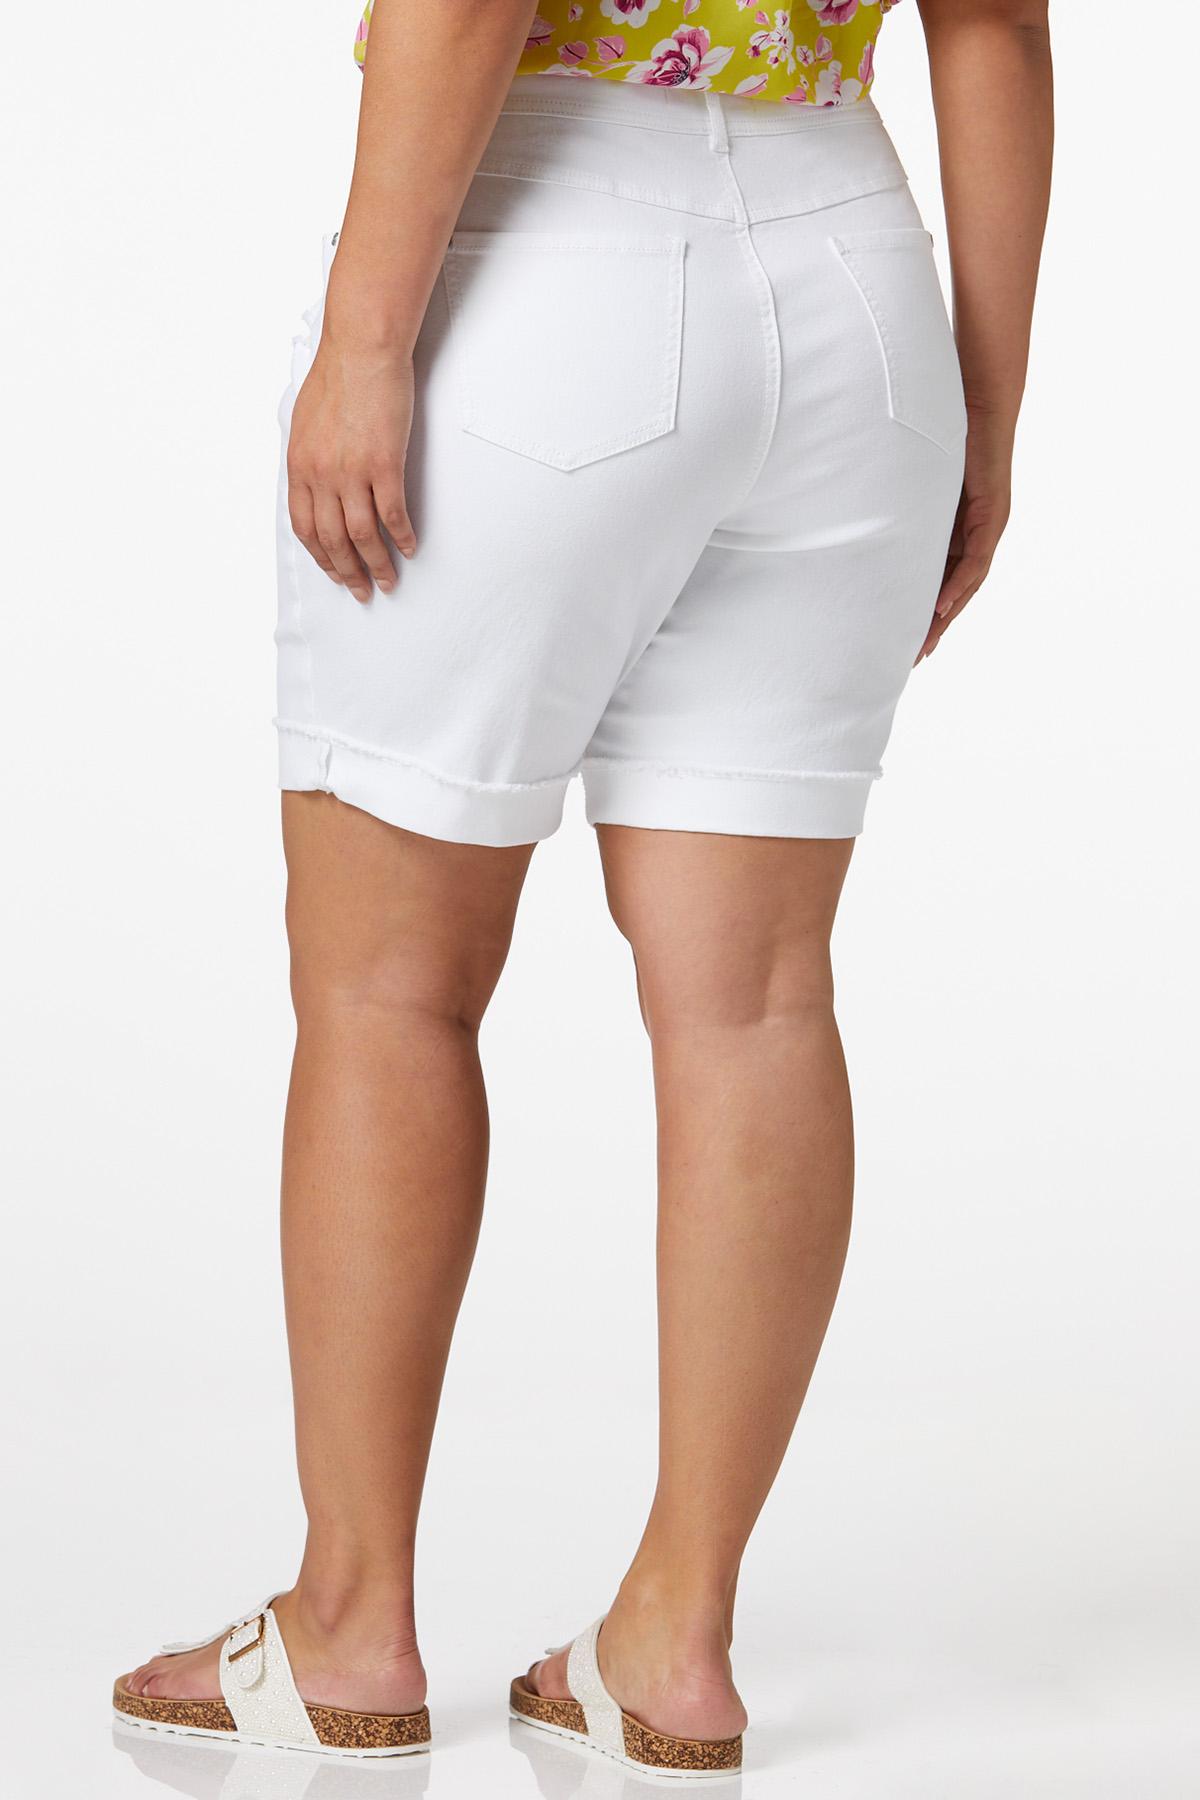 Floral Lace Shorts - White - Pomelo Fashion